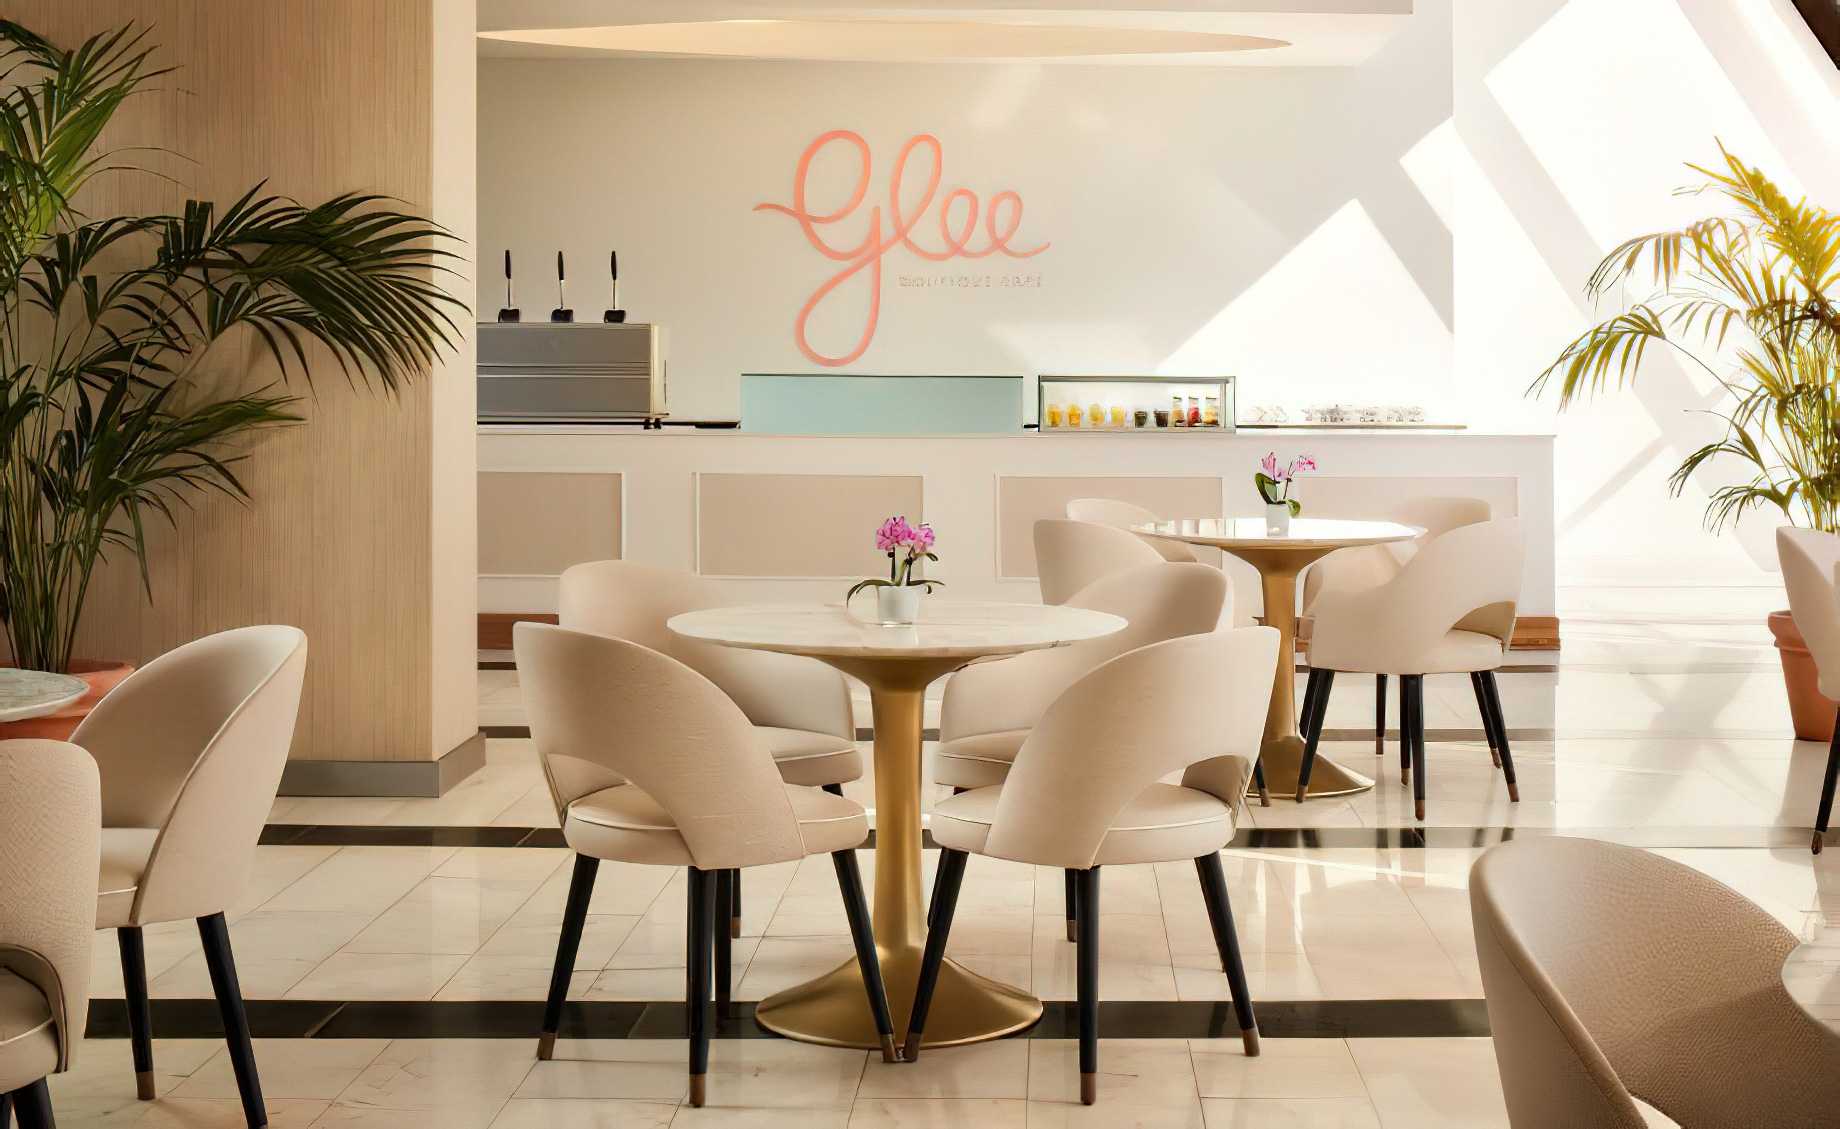 Tivoli Marina Vilamoura Algarve Resort – Portugal – Glee Boutique Cafe